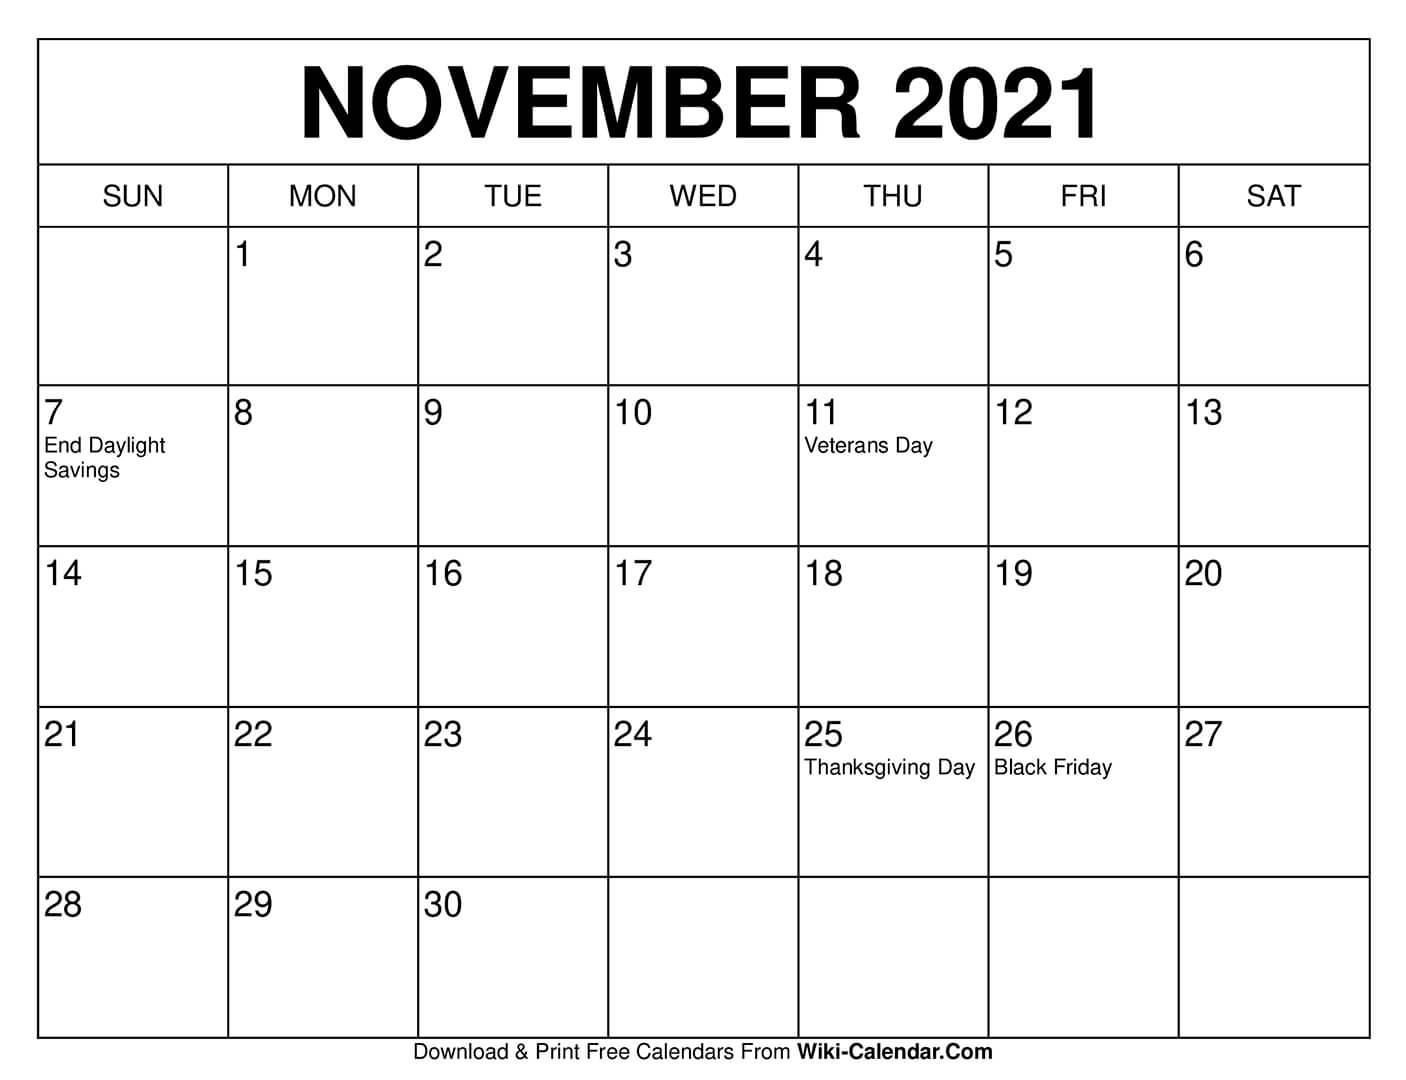 Wiki Calendar November 2021 Calendar 2021